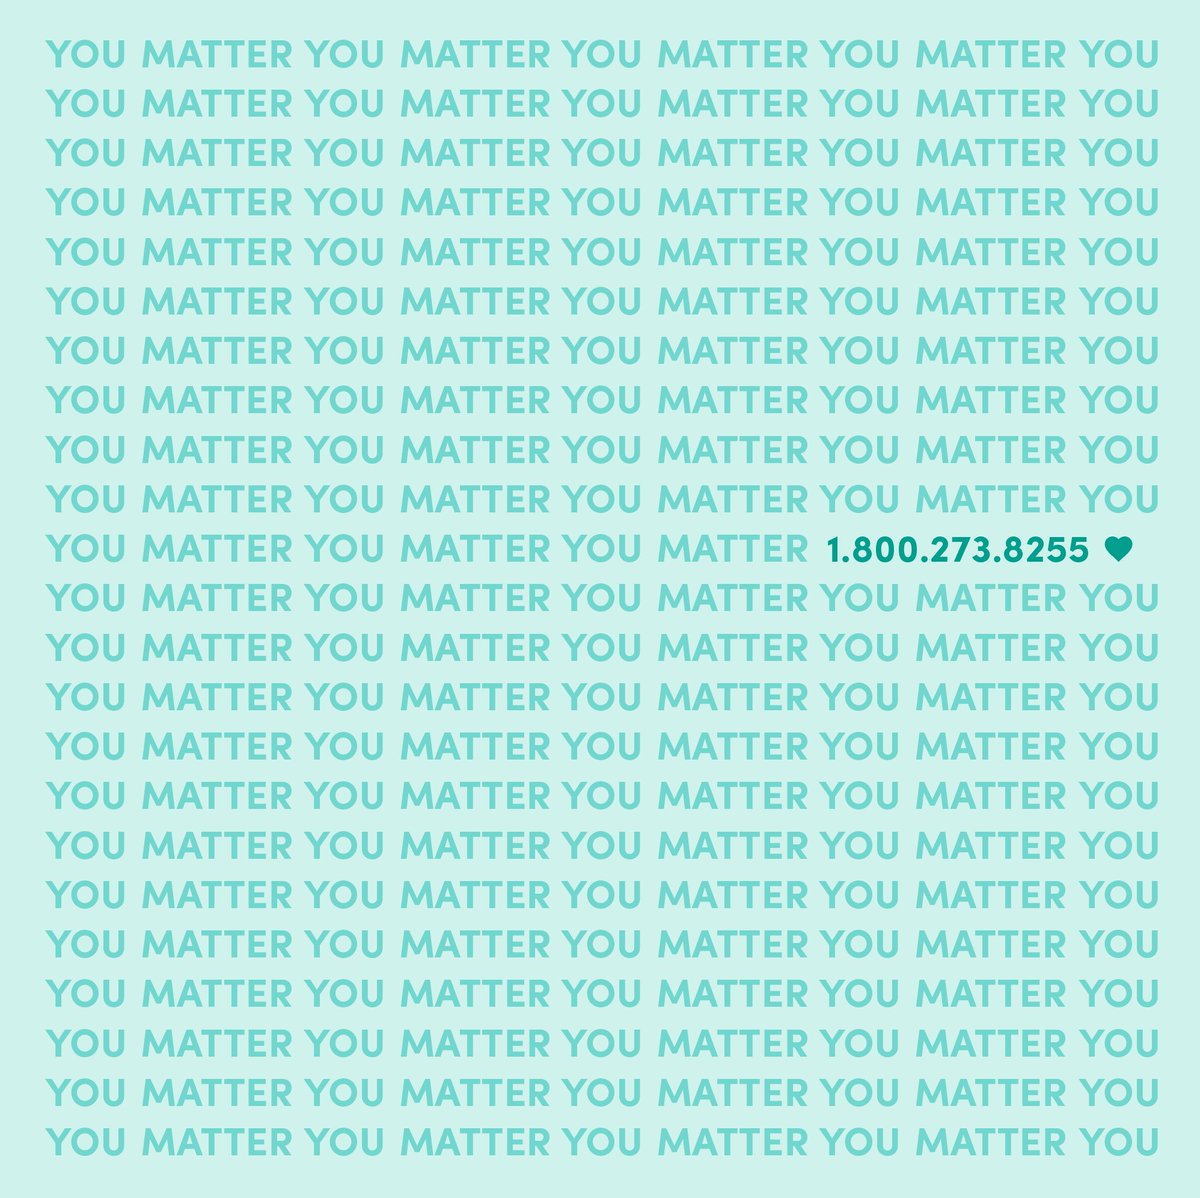 RT @hellosunshine: You matter. https://t.co/avtZefnpE0